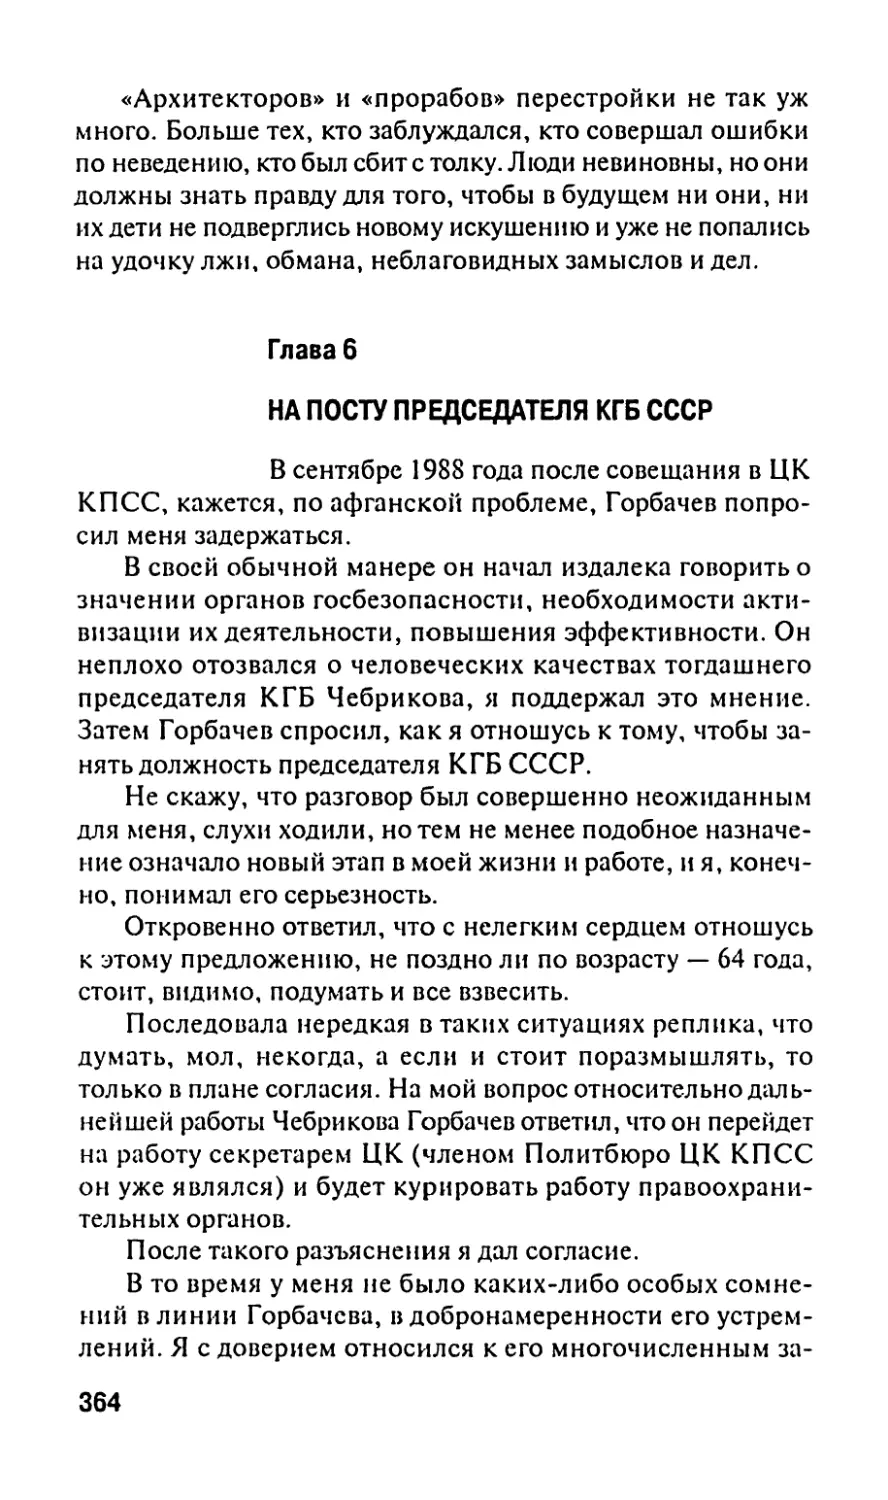 Глава 6. На посту председателя КГБ СССР